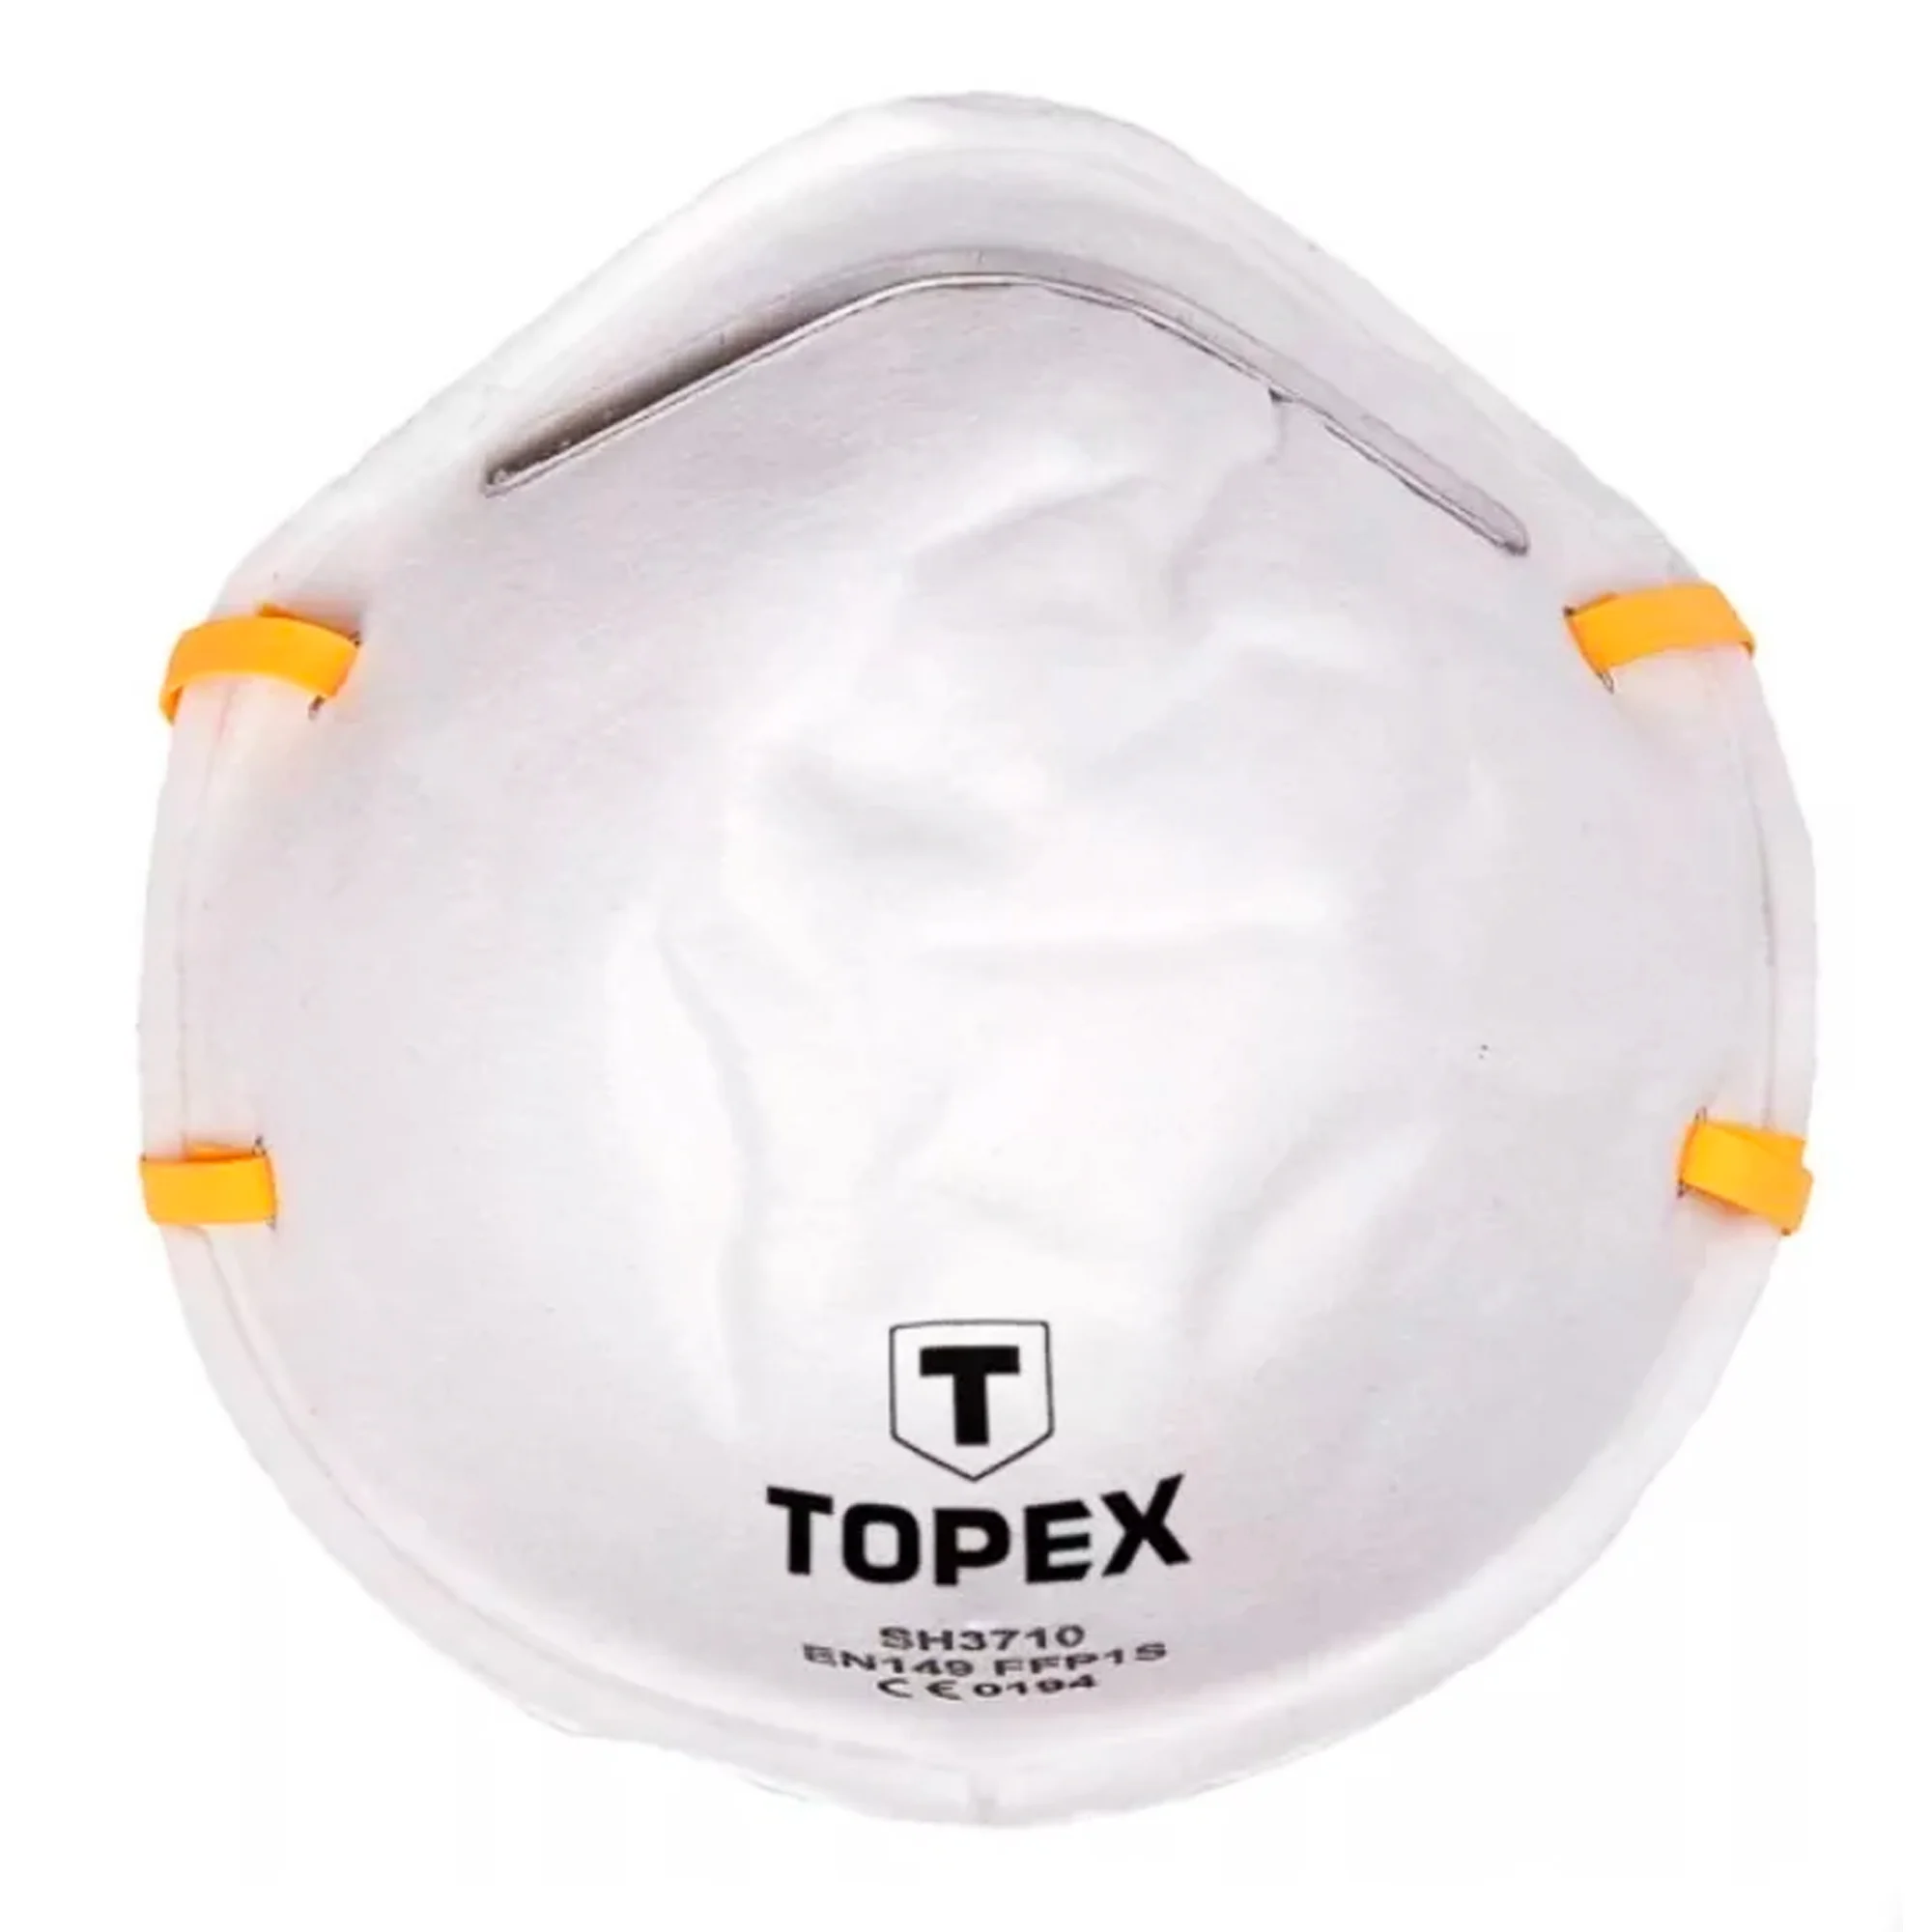 Маска защитная TOPEX, 5 шт. (82S133)